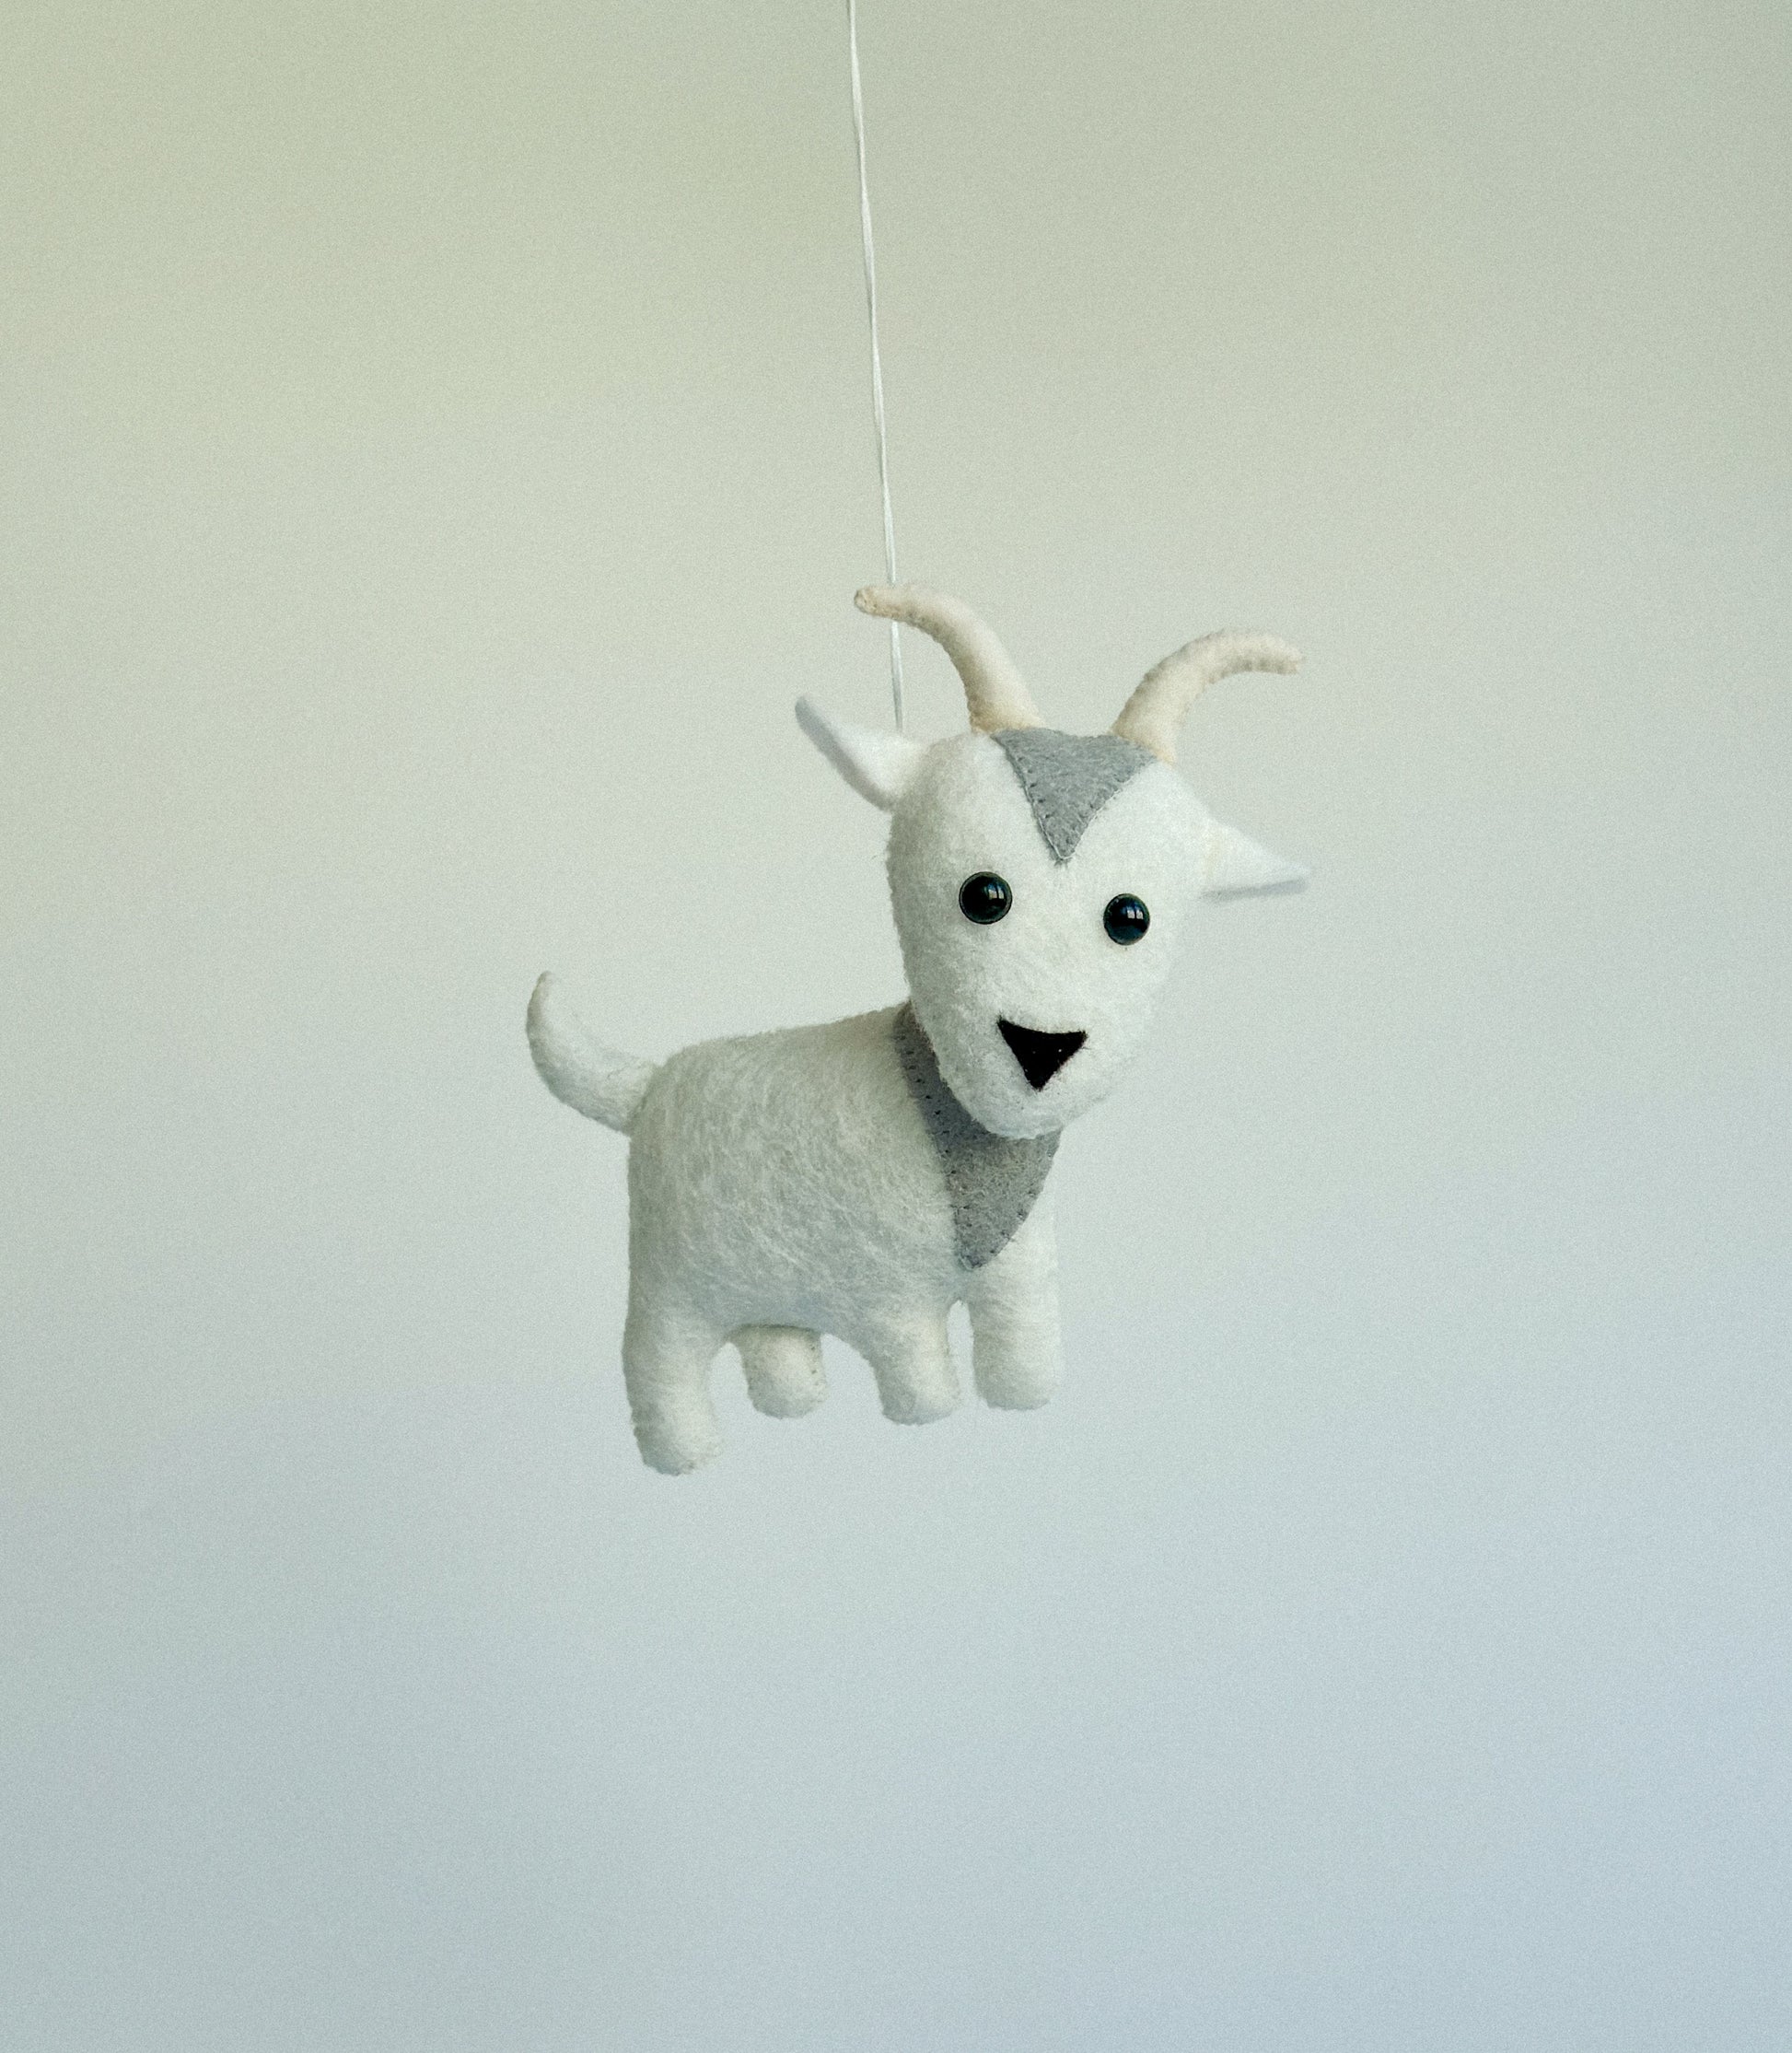 Handcrafted Felt Goat Ornament